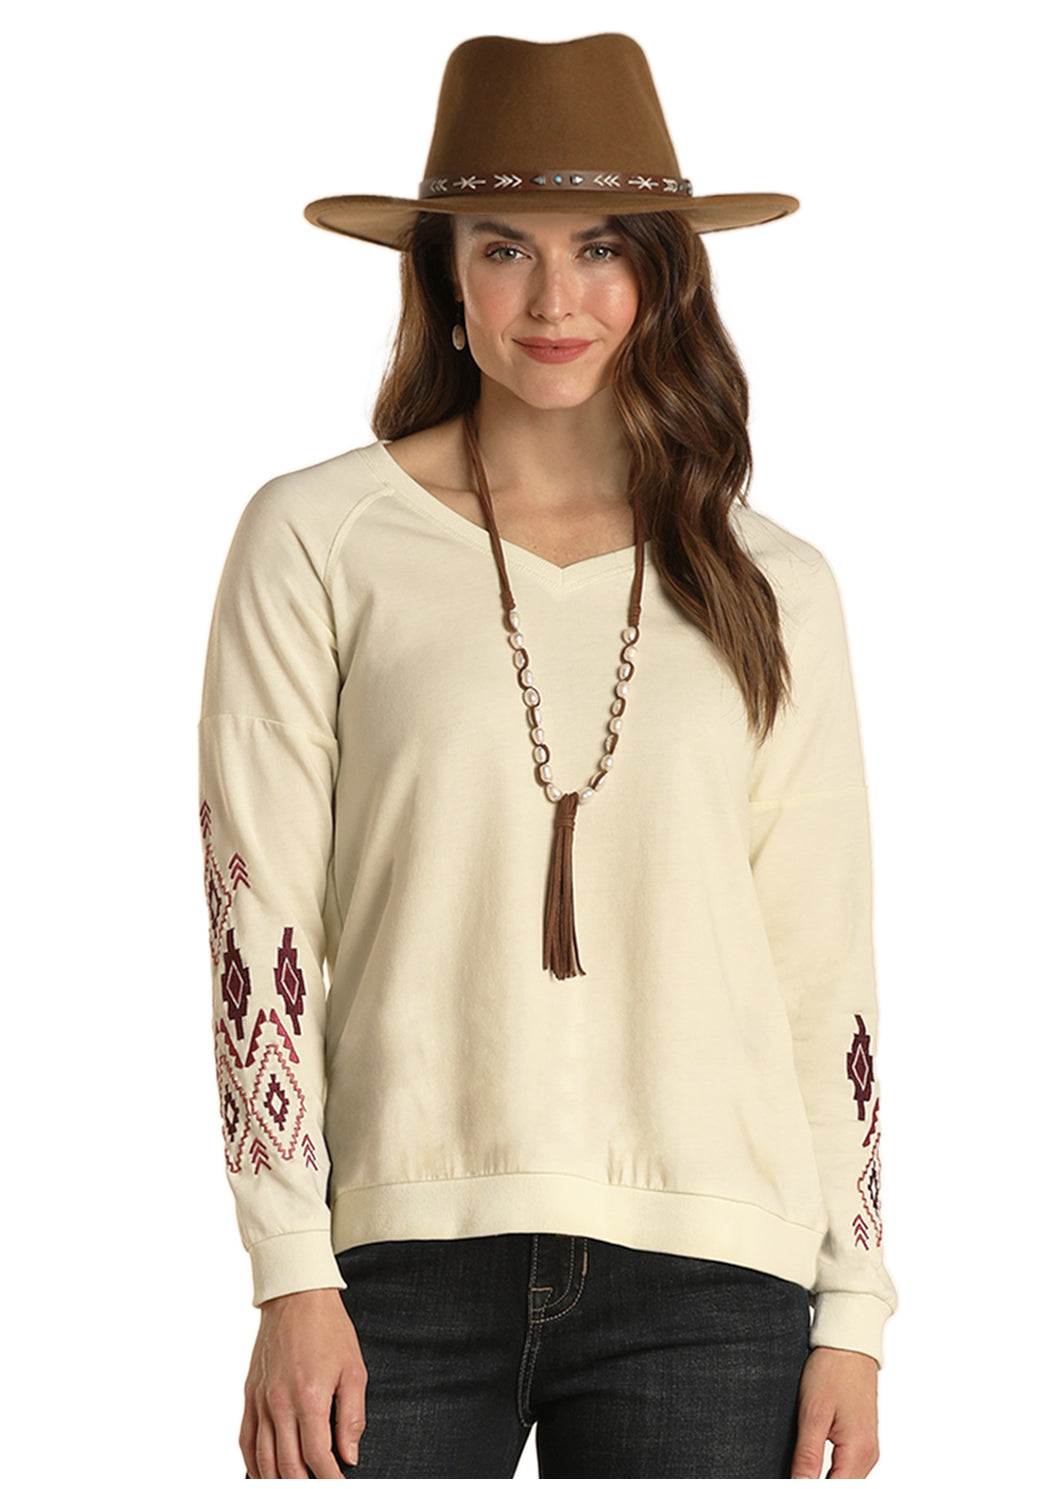 Panhandle Women's Embroidered Sweatshirt